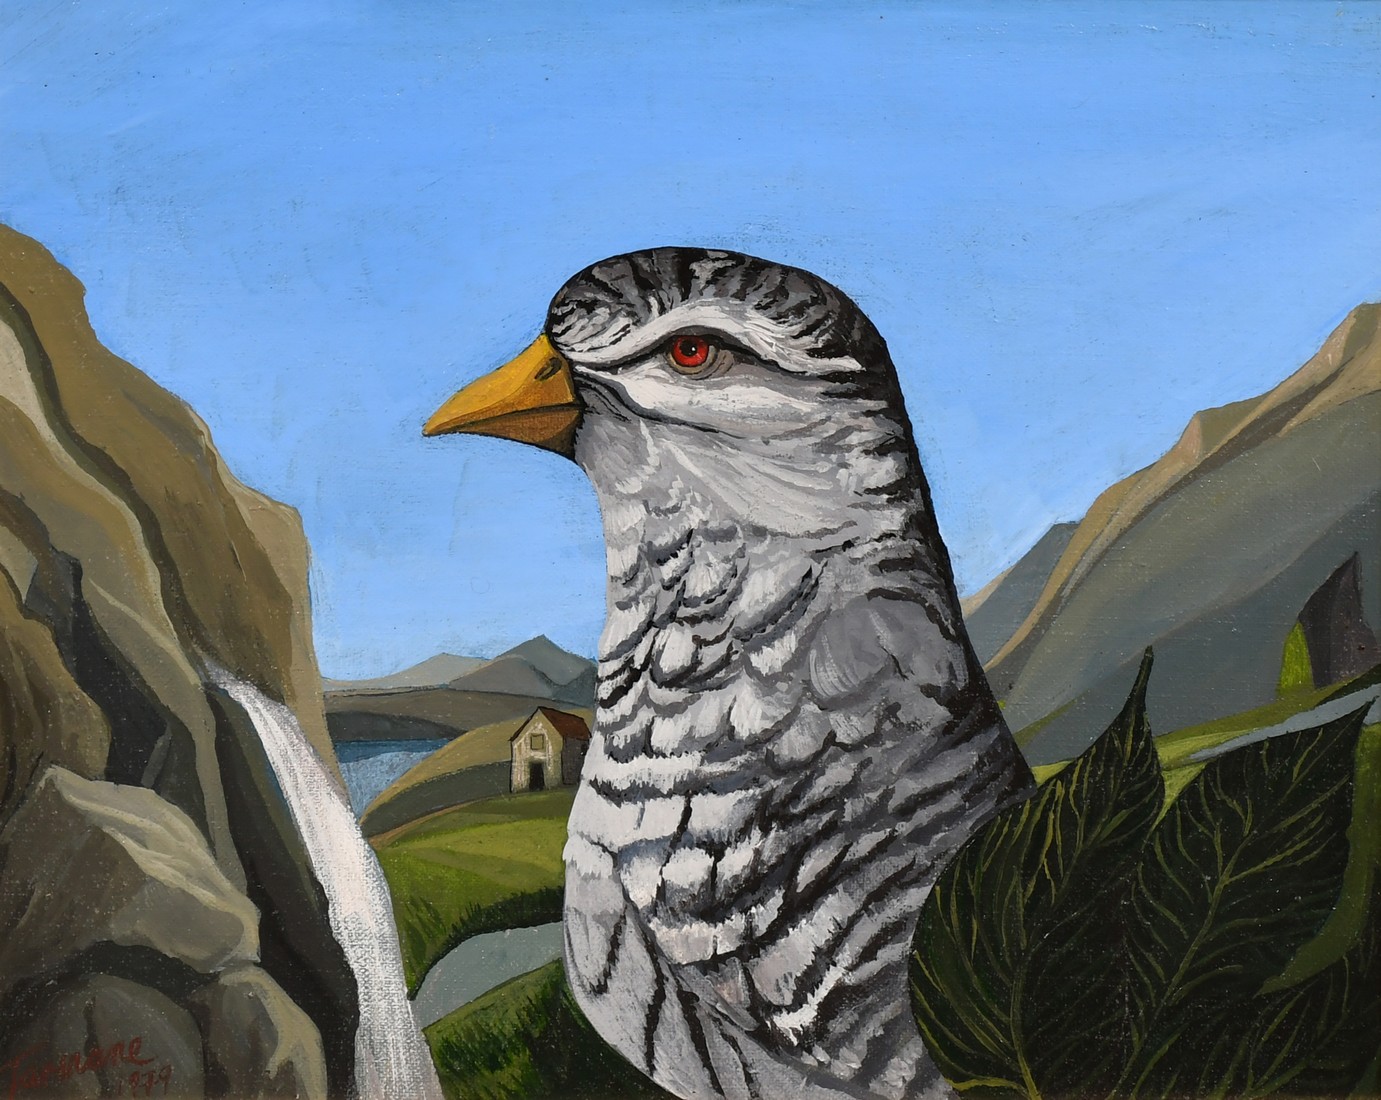 Terence Tarsnane (b. 1939), 'Cuckoo', circa 1979, acrylic, signed and dated, 9" x 11.5" (23 x